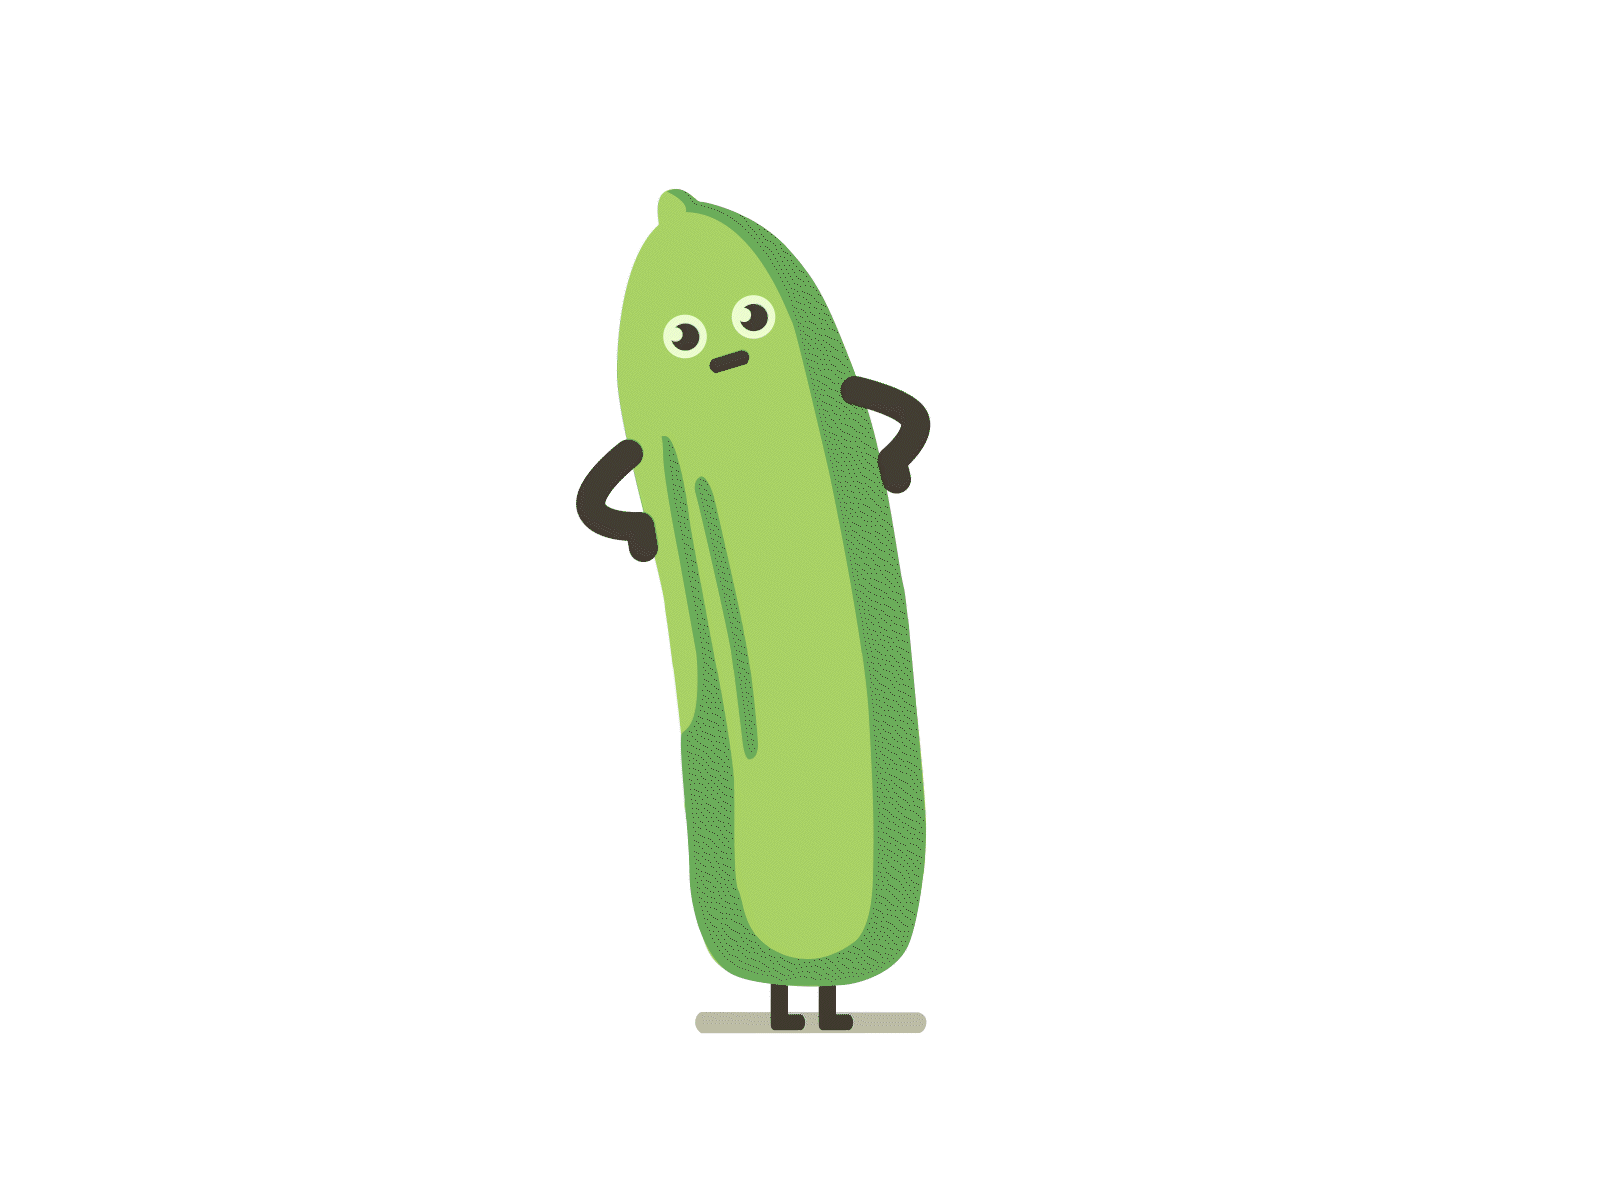 Cucumber animation